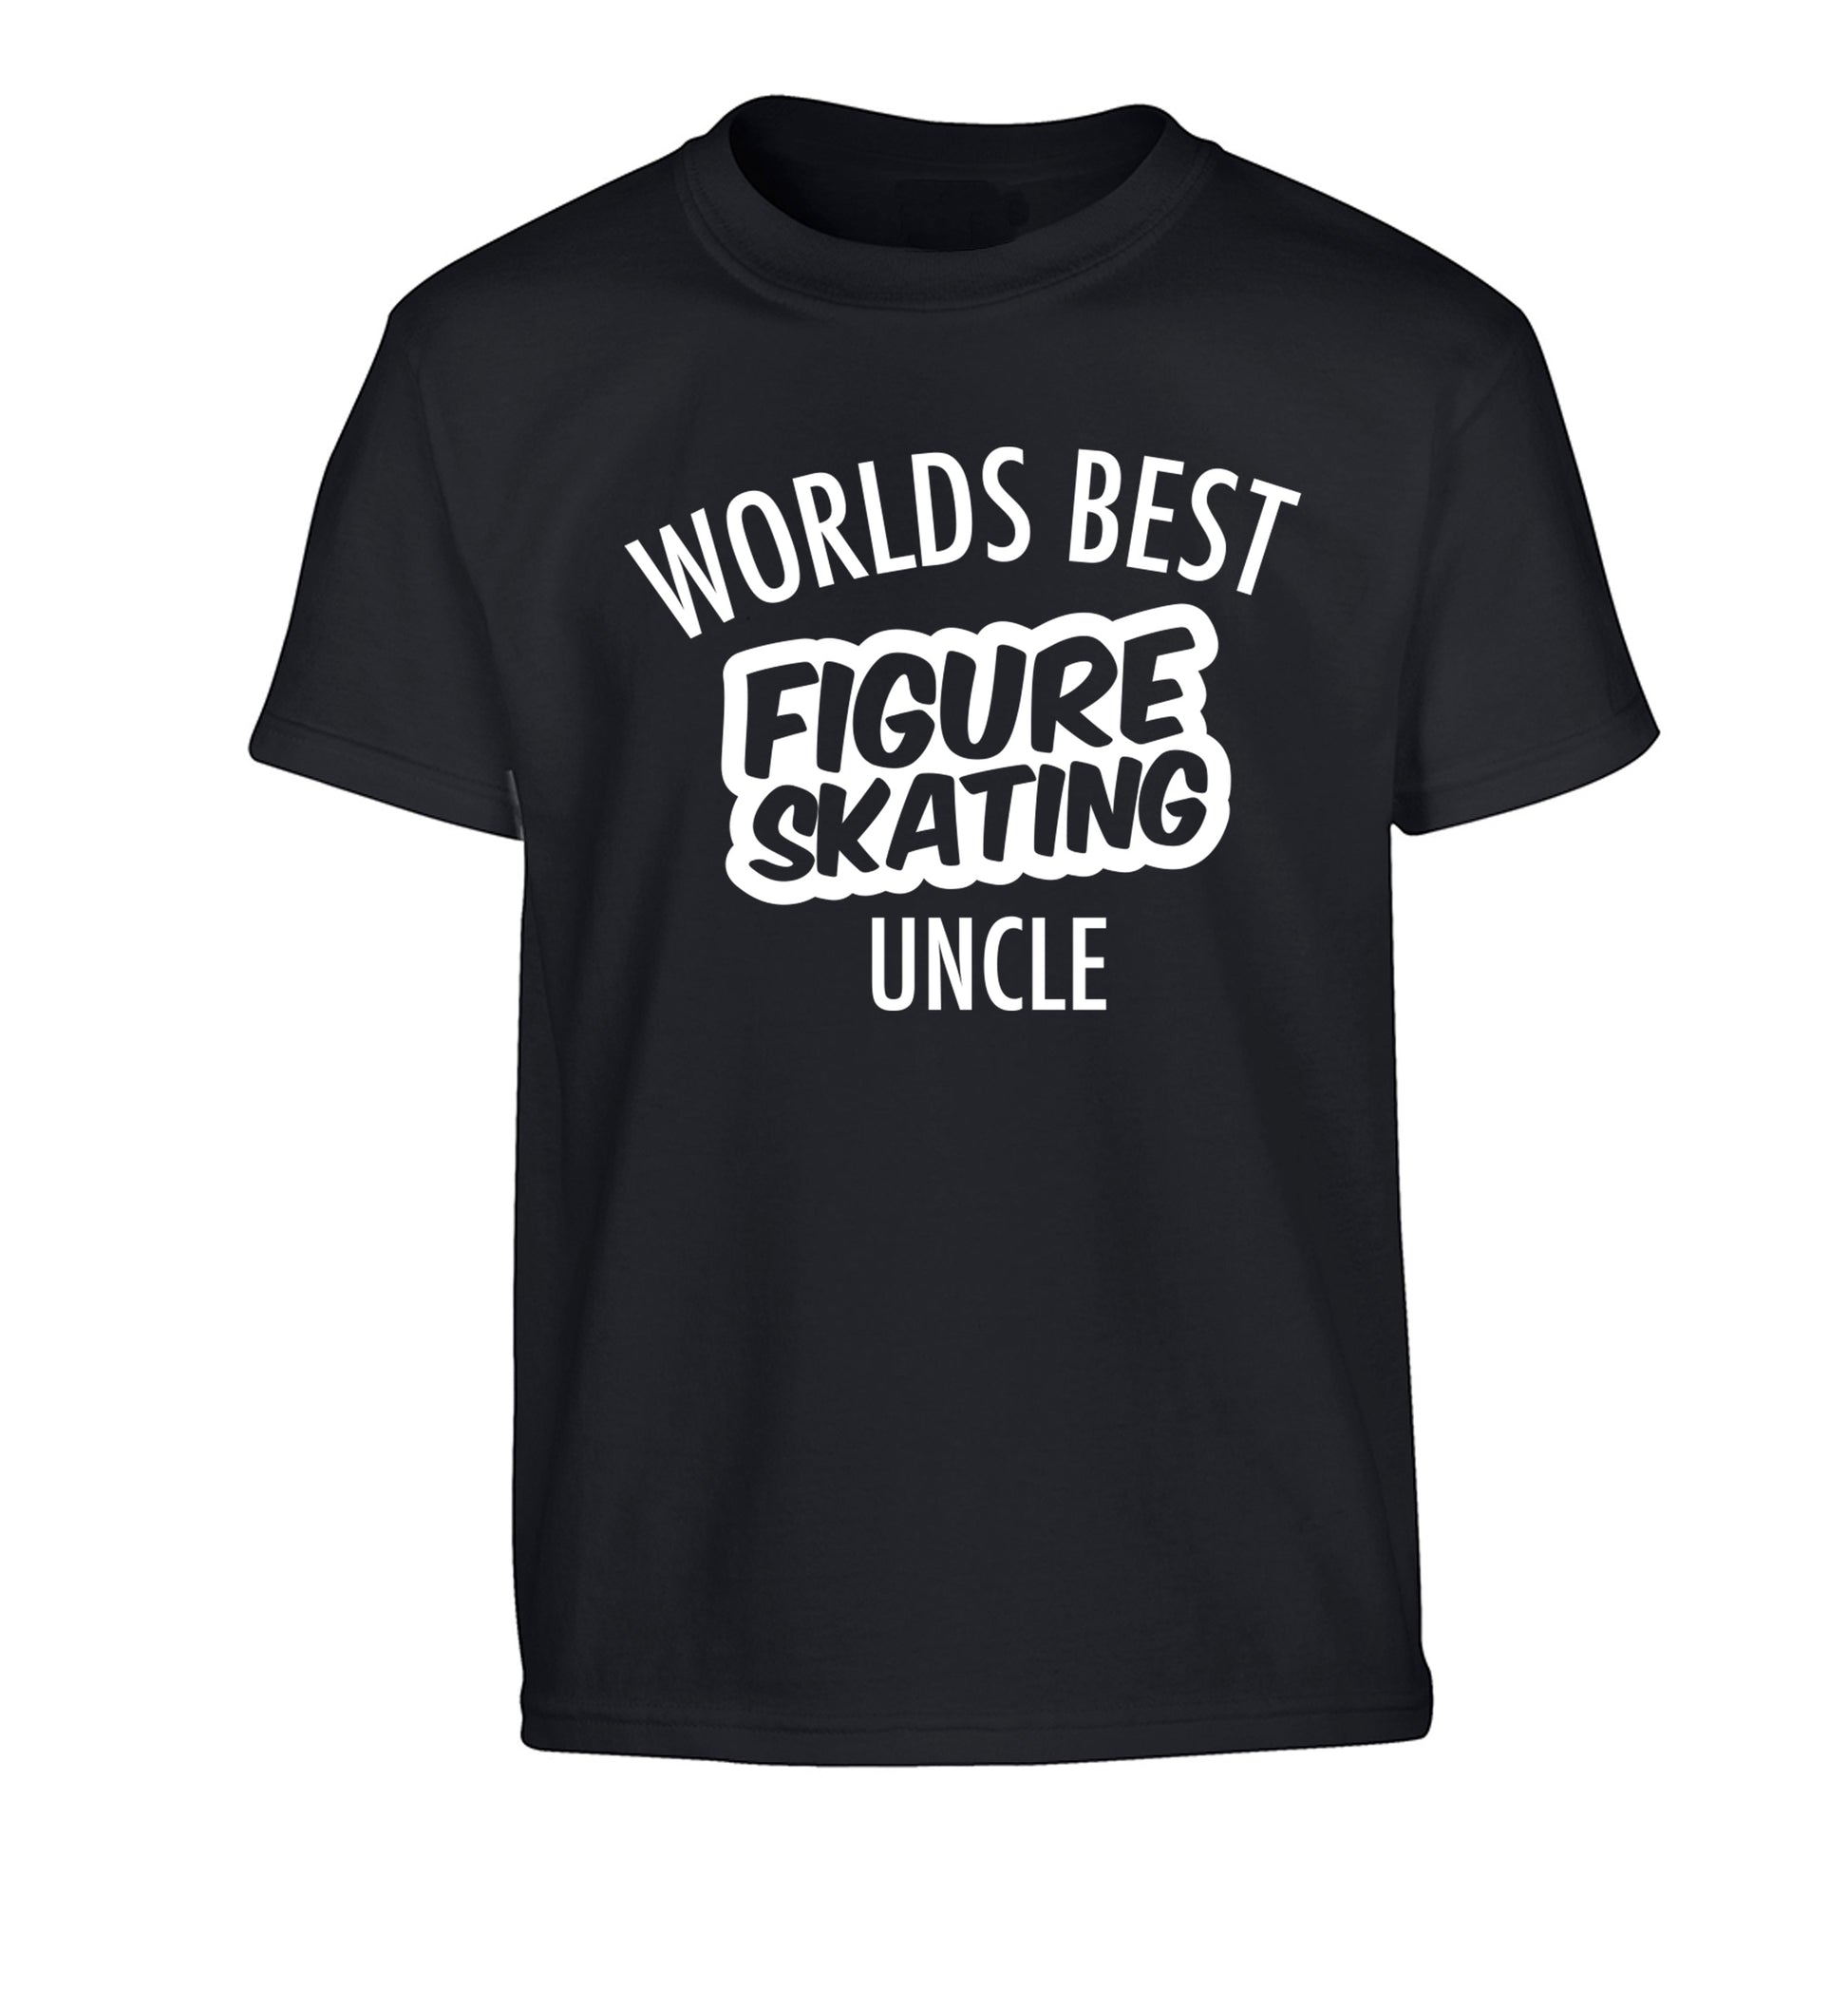 Worlds best figure skating uncle Children's black Tshirt 12-14 Years